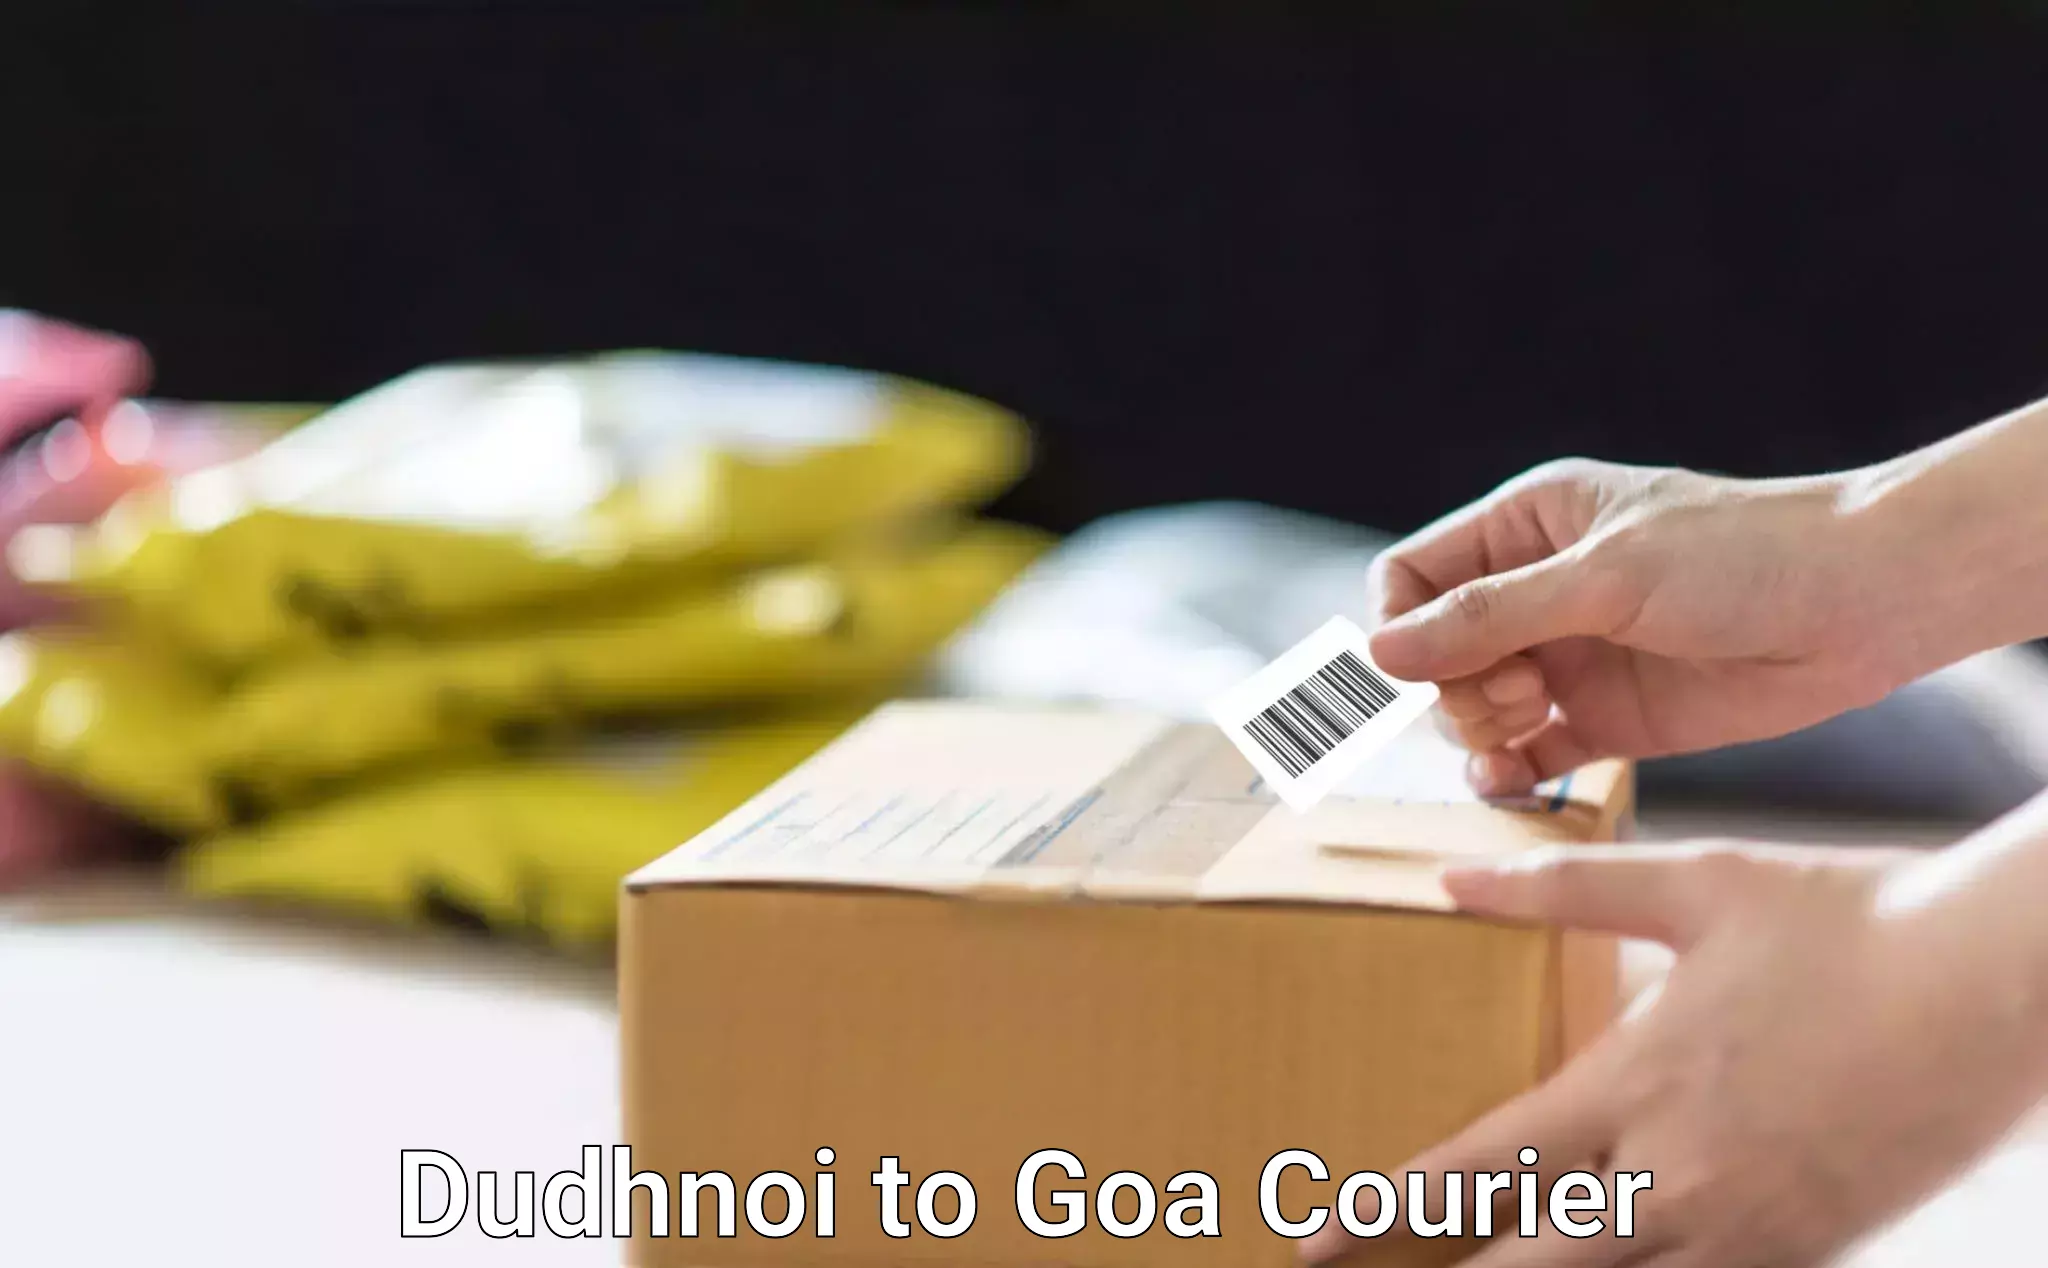 Courier service comparison Dudhnoi to Goa University